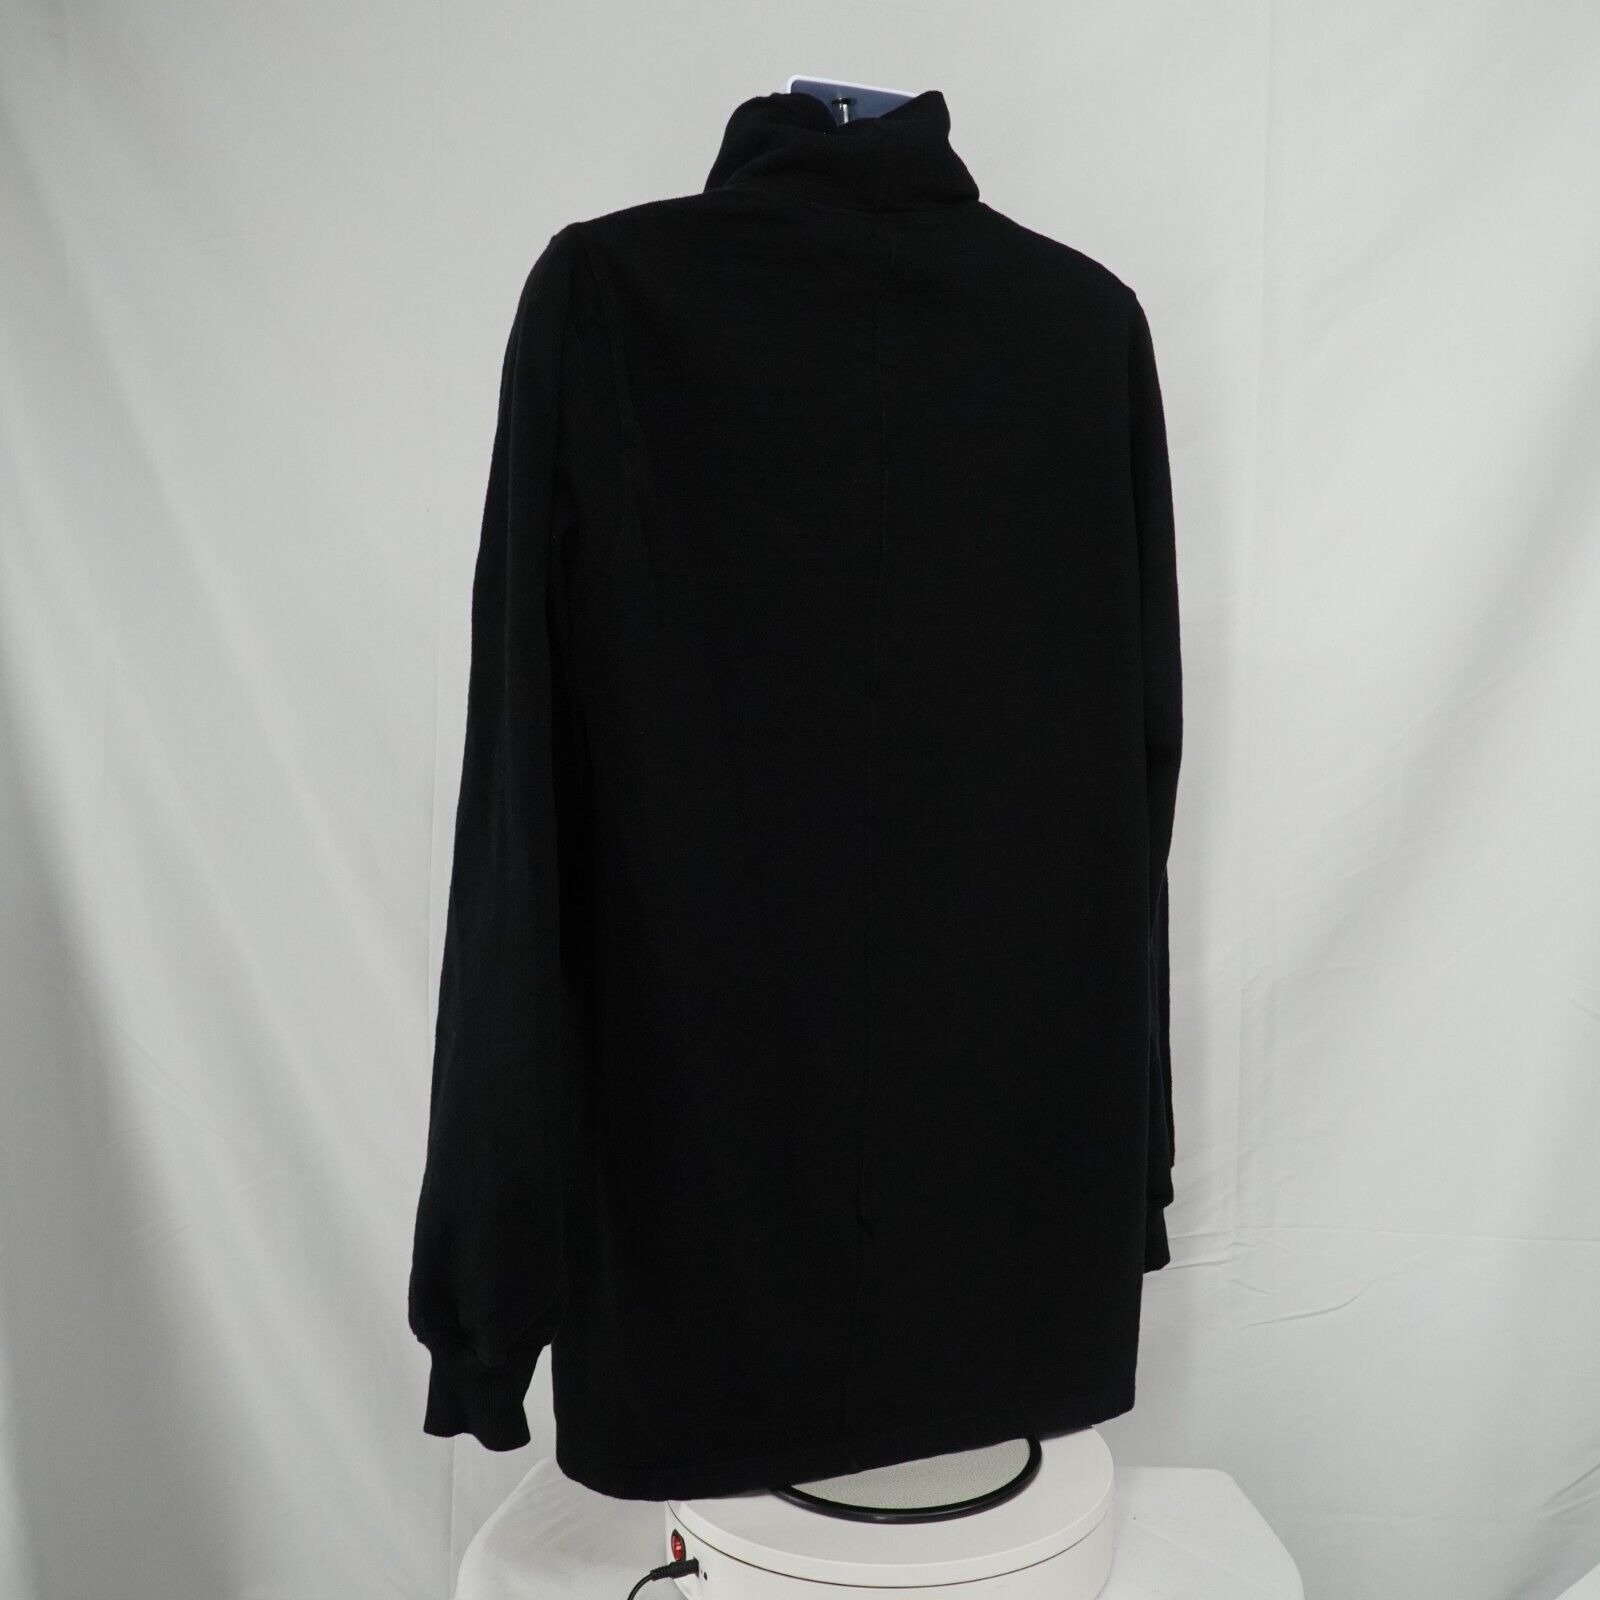 Rick Black Turtleneck Sweater Size Medium FW17 Glitter - 12